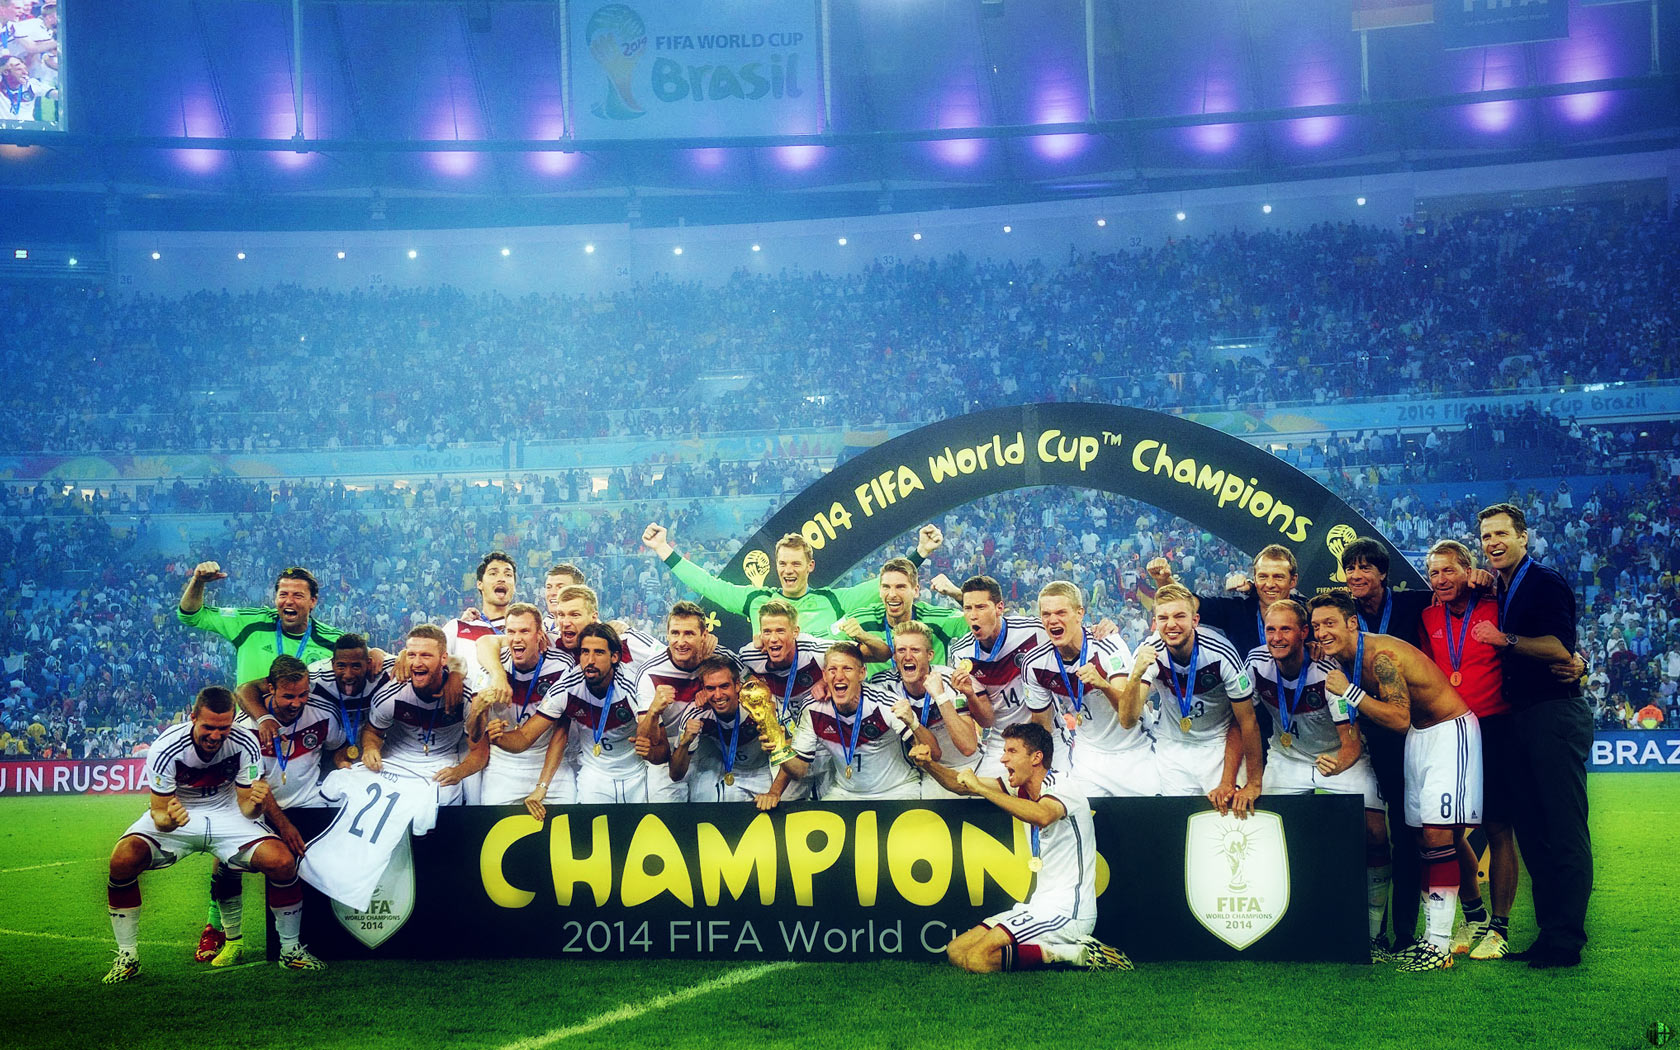 Pc壁紙 ドイツ代表 ブラジルw杯優勝 サッカー壁紙 自分で作ったサッカー関連のpc用壁紙 Naver まとめ